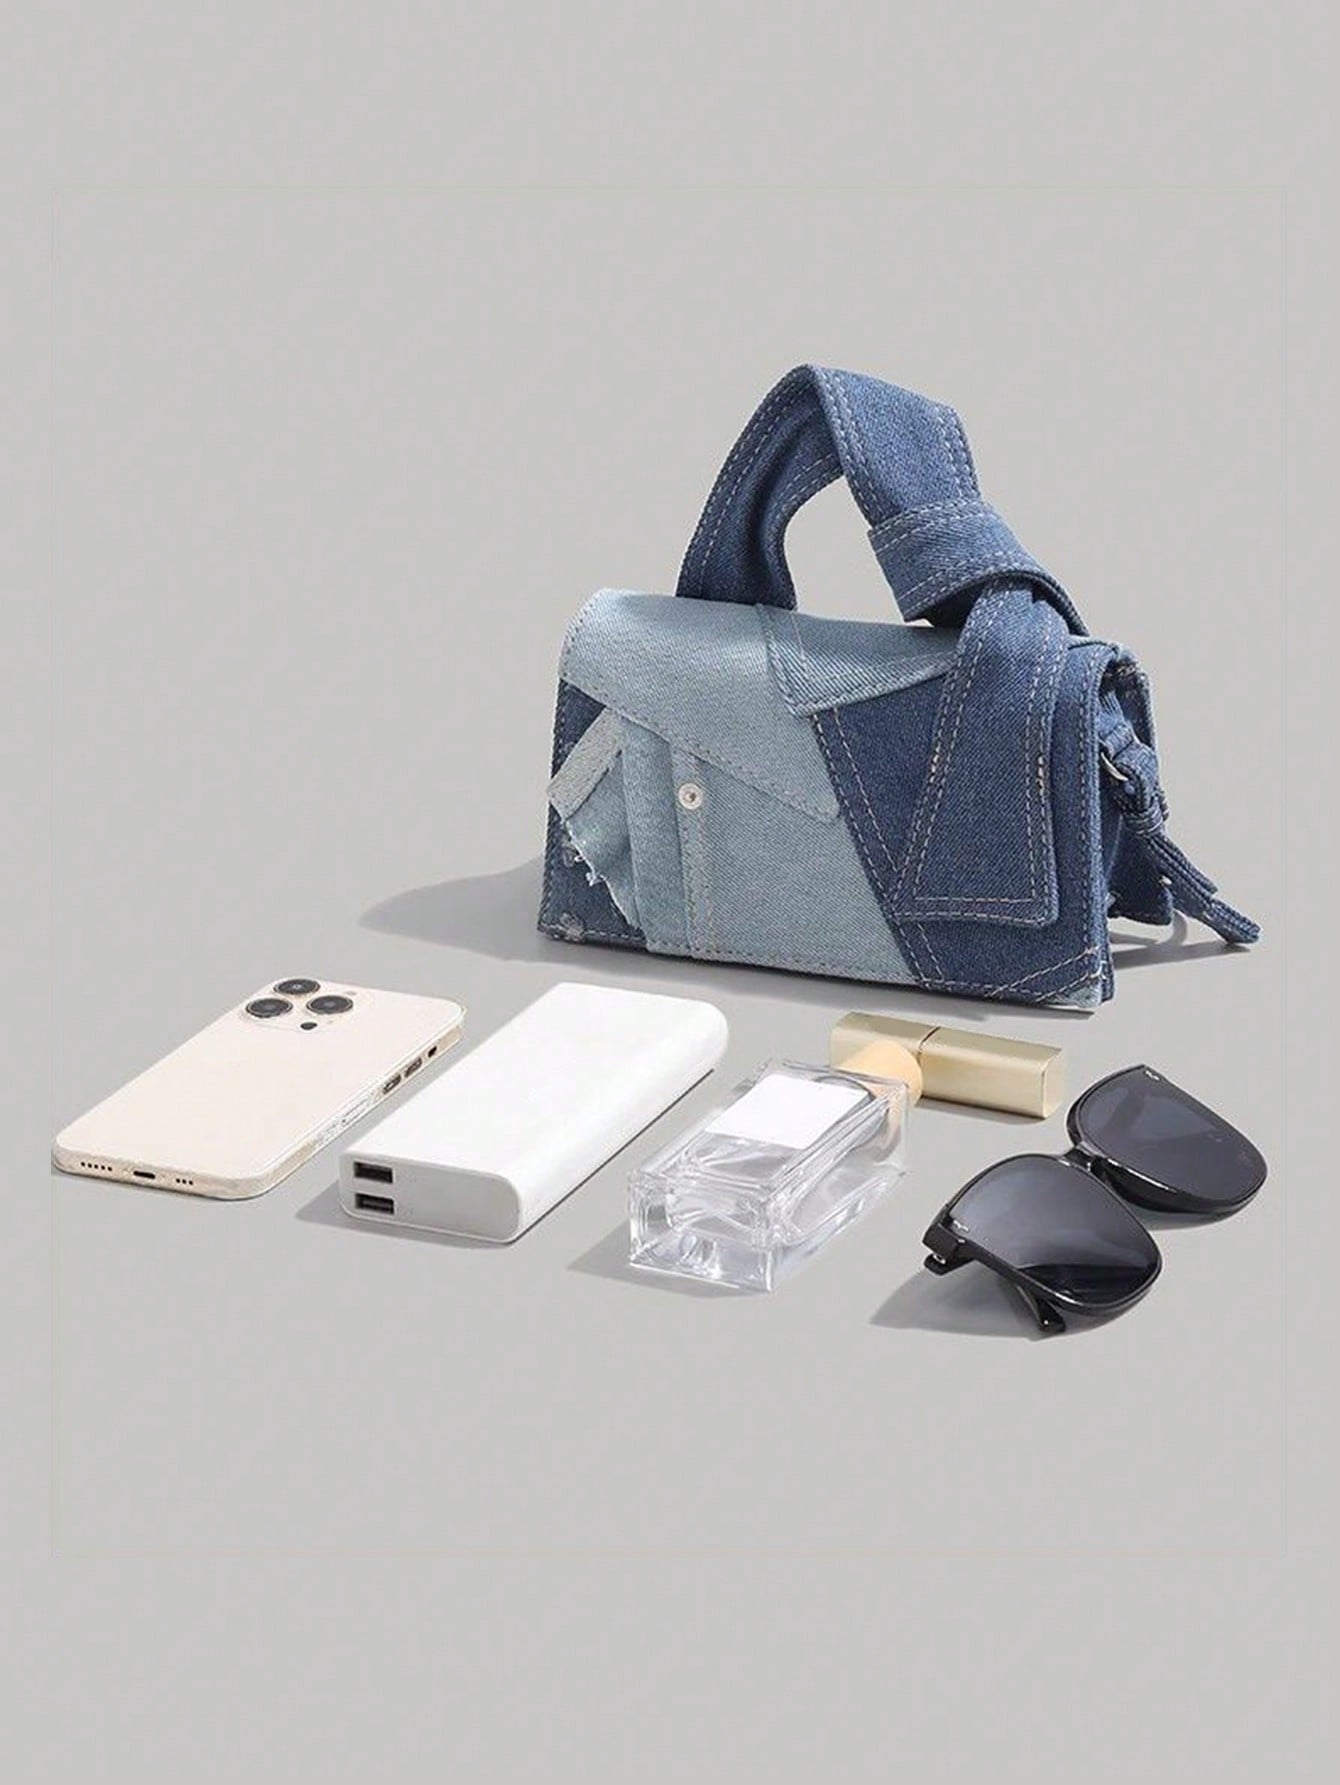 Nextthink Shoulder Bag High Sense Commuter New Handbag - NextthinkShope4a03d56-2bde-4415-9745-bf699d0dbcc9705353020384